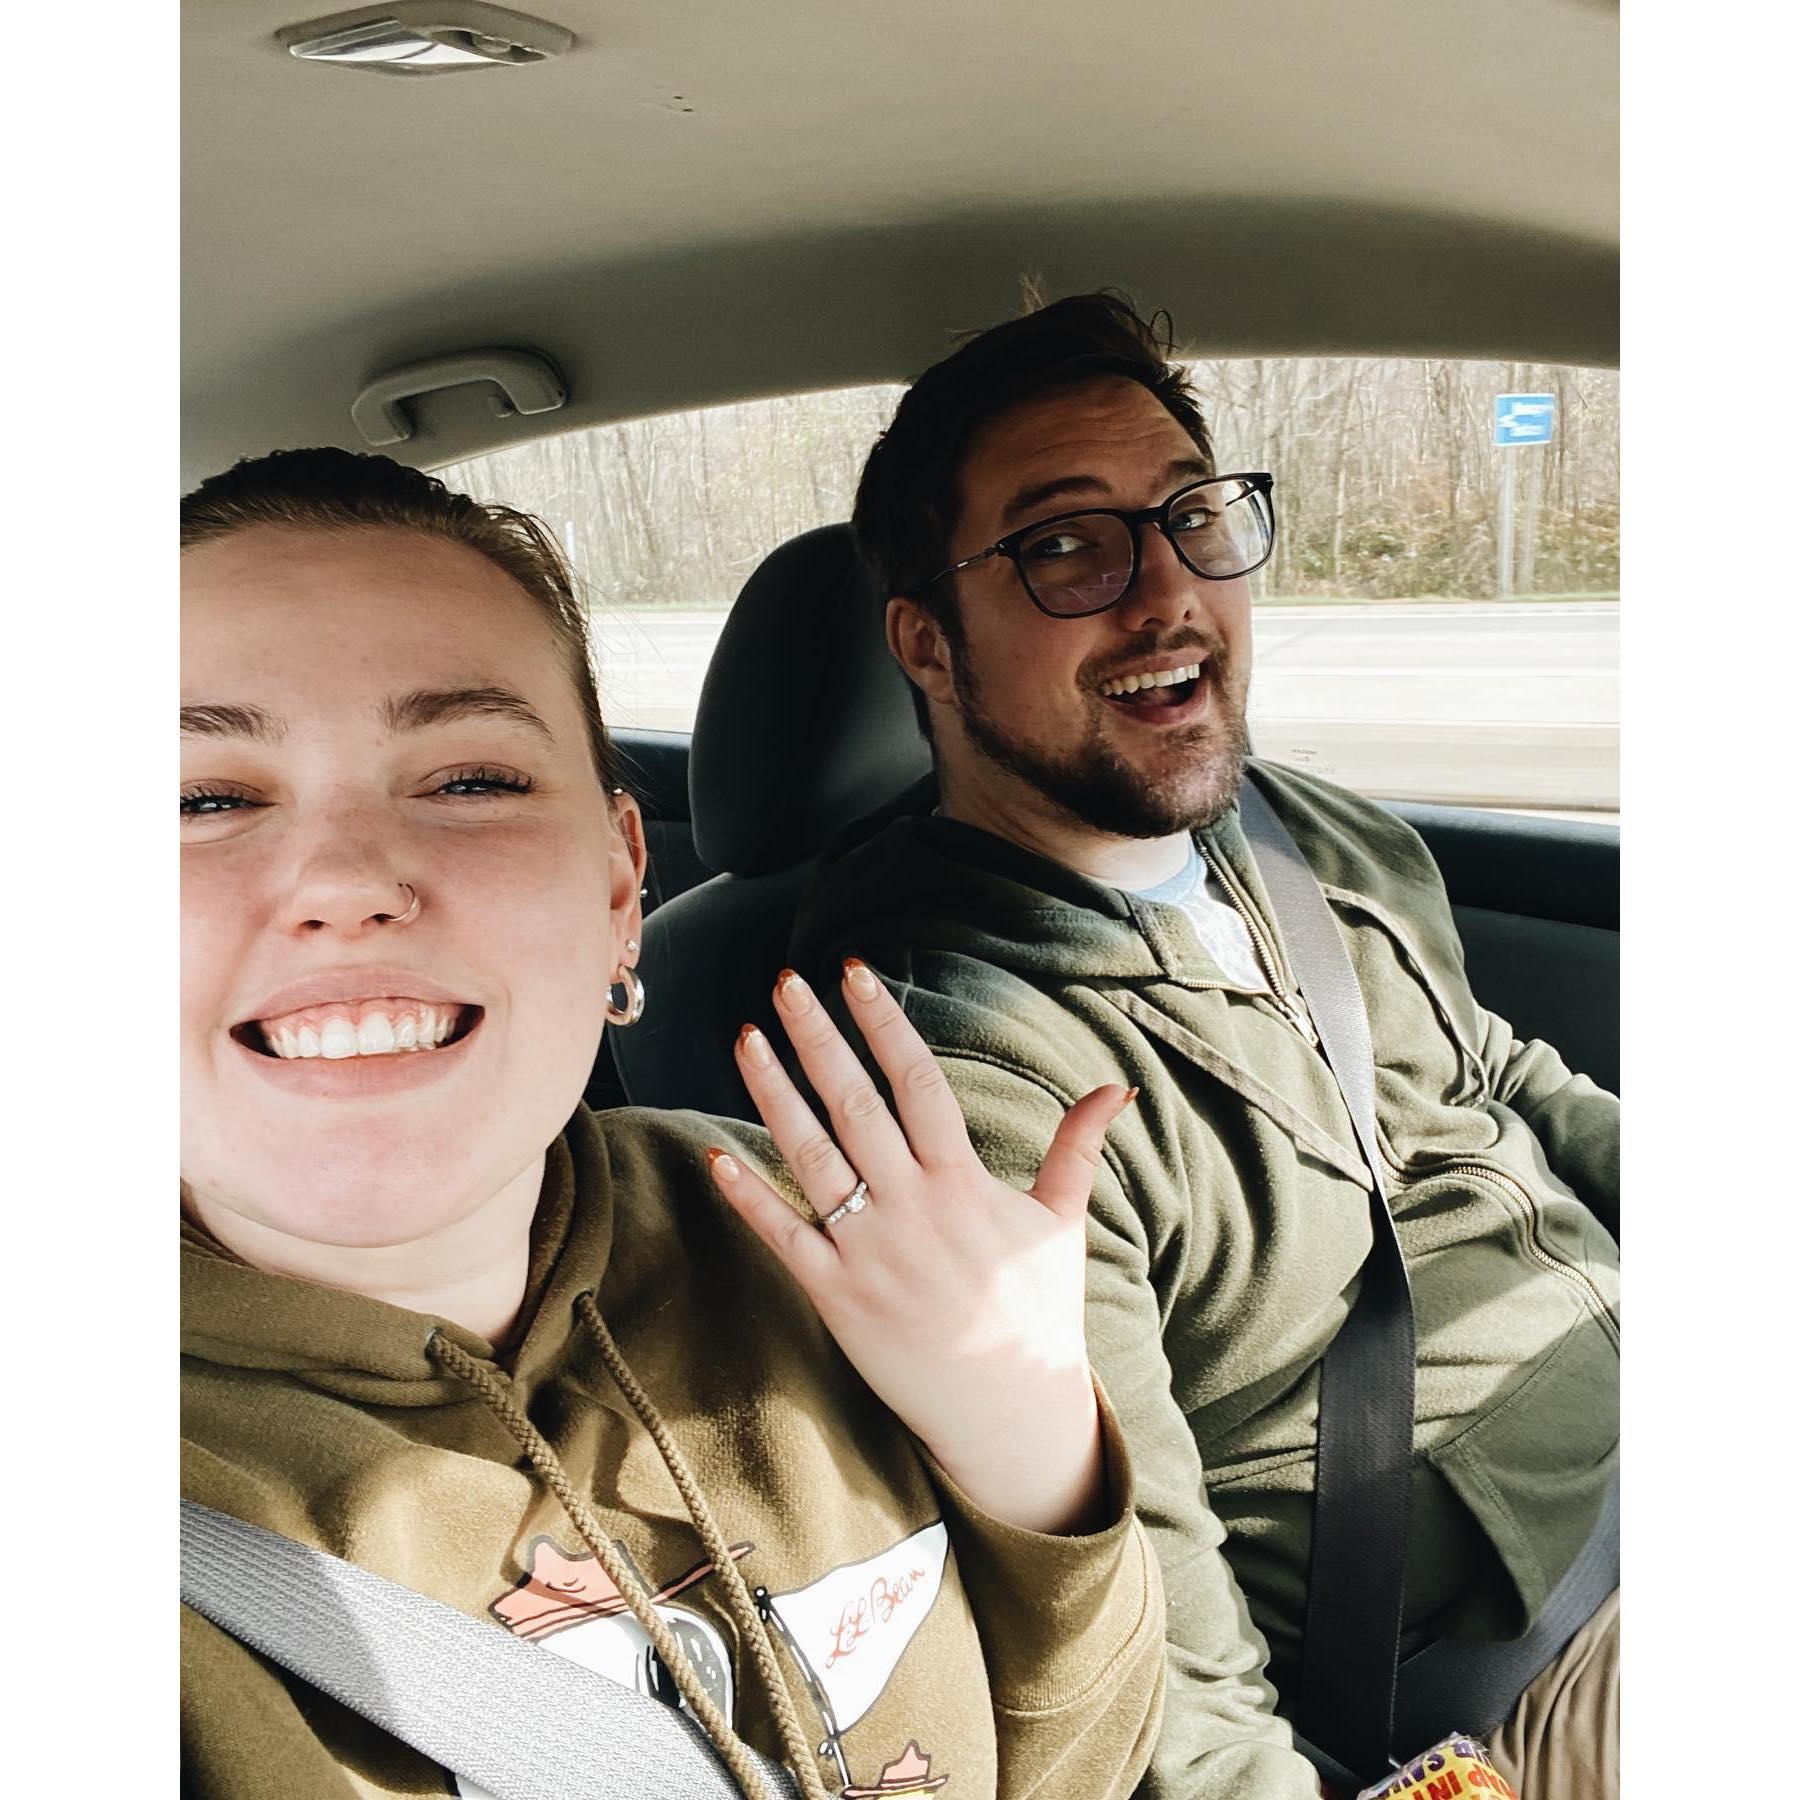 The morning we got engaged!